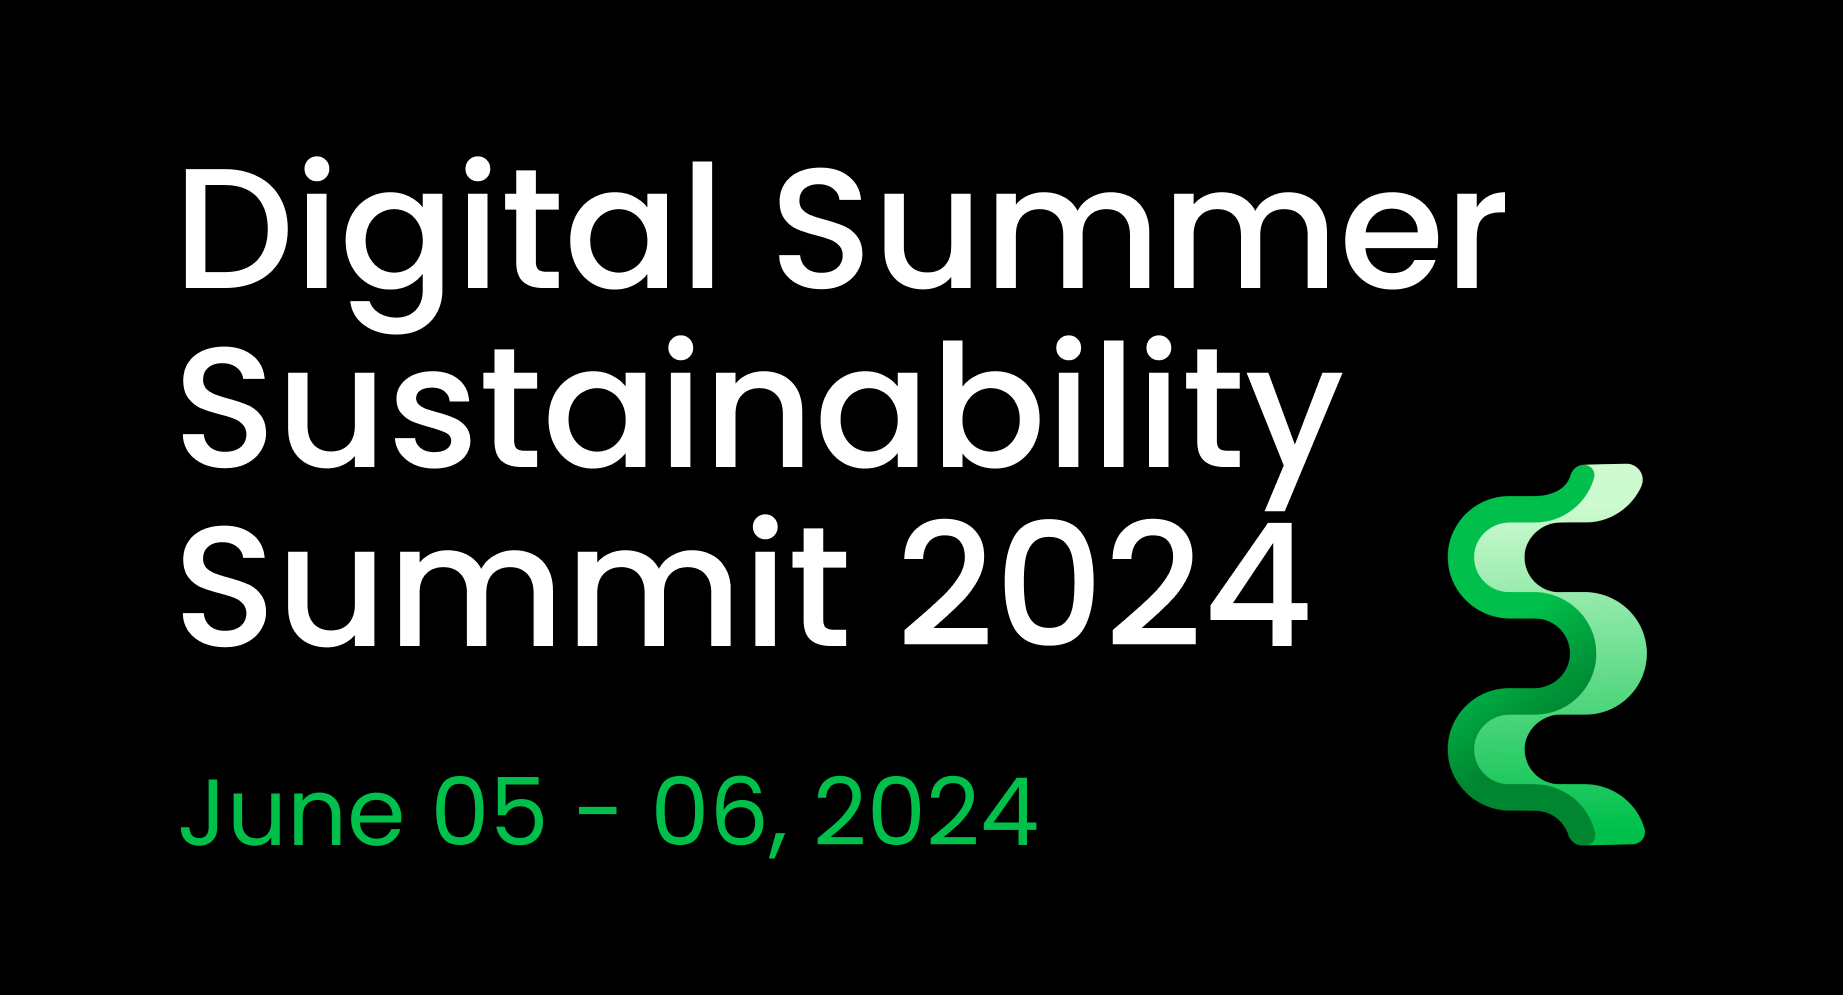 Digital Summer Sustainability Summit